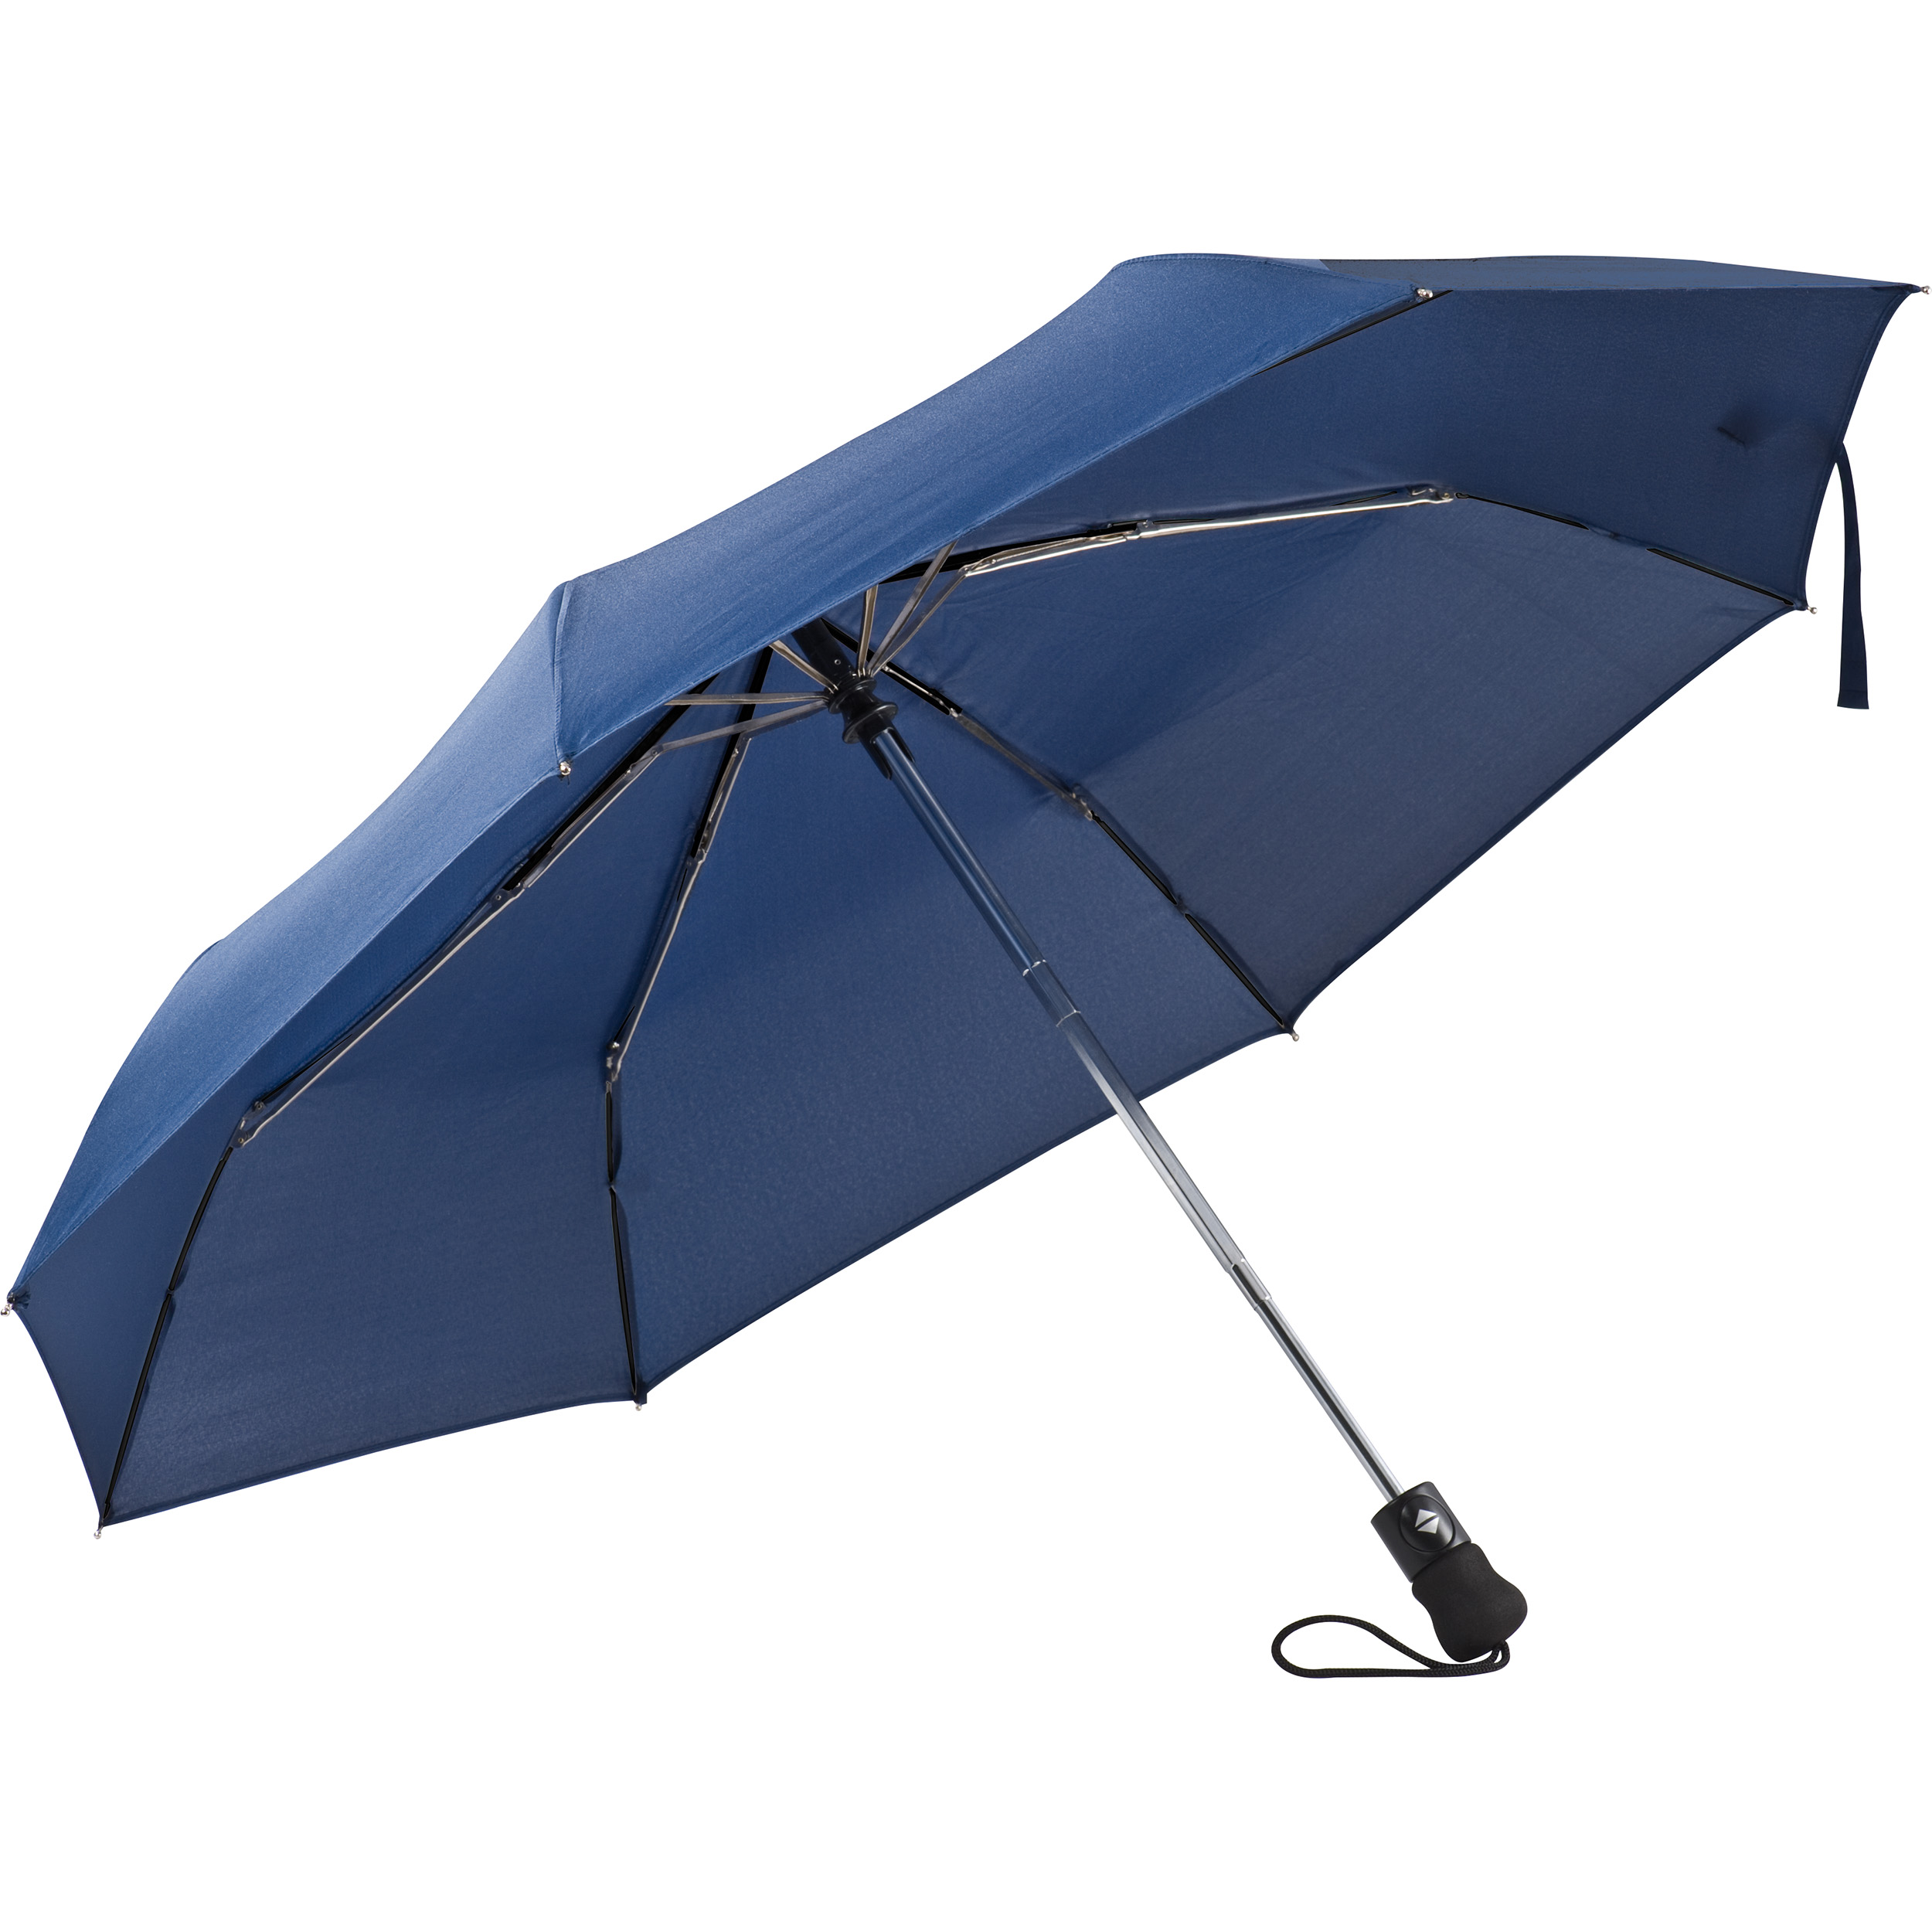 AutoTech Collapsible Umbrella - village_name - Downham Market